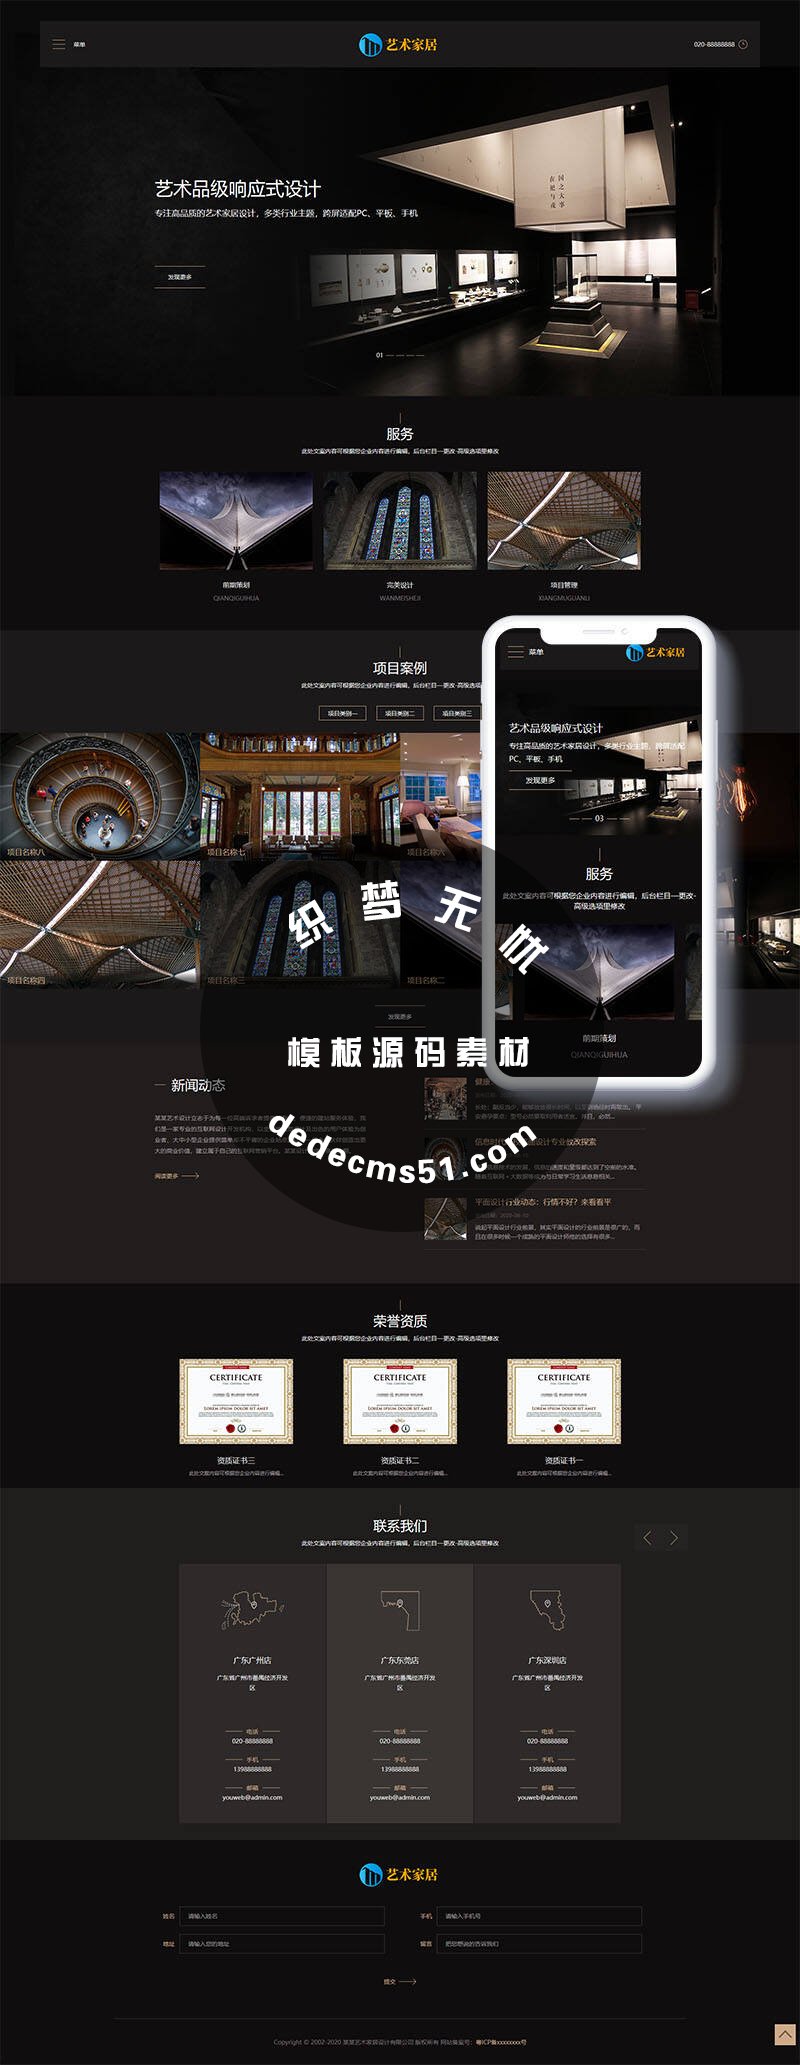 HTML5响应式艺术家居设计家装装修网站织梦模板dede模板下载(自适应手机)